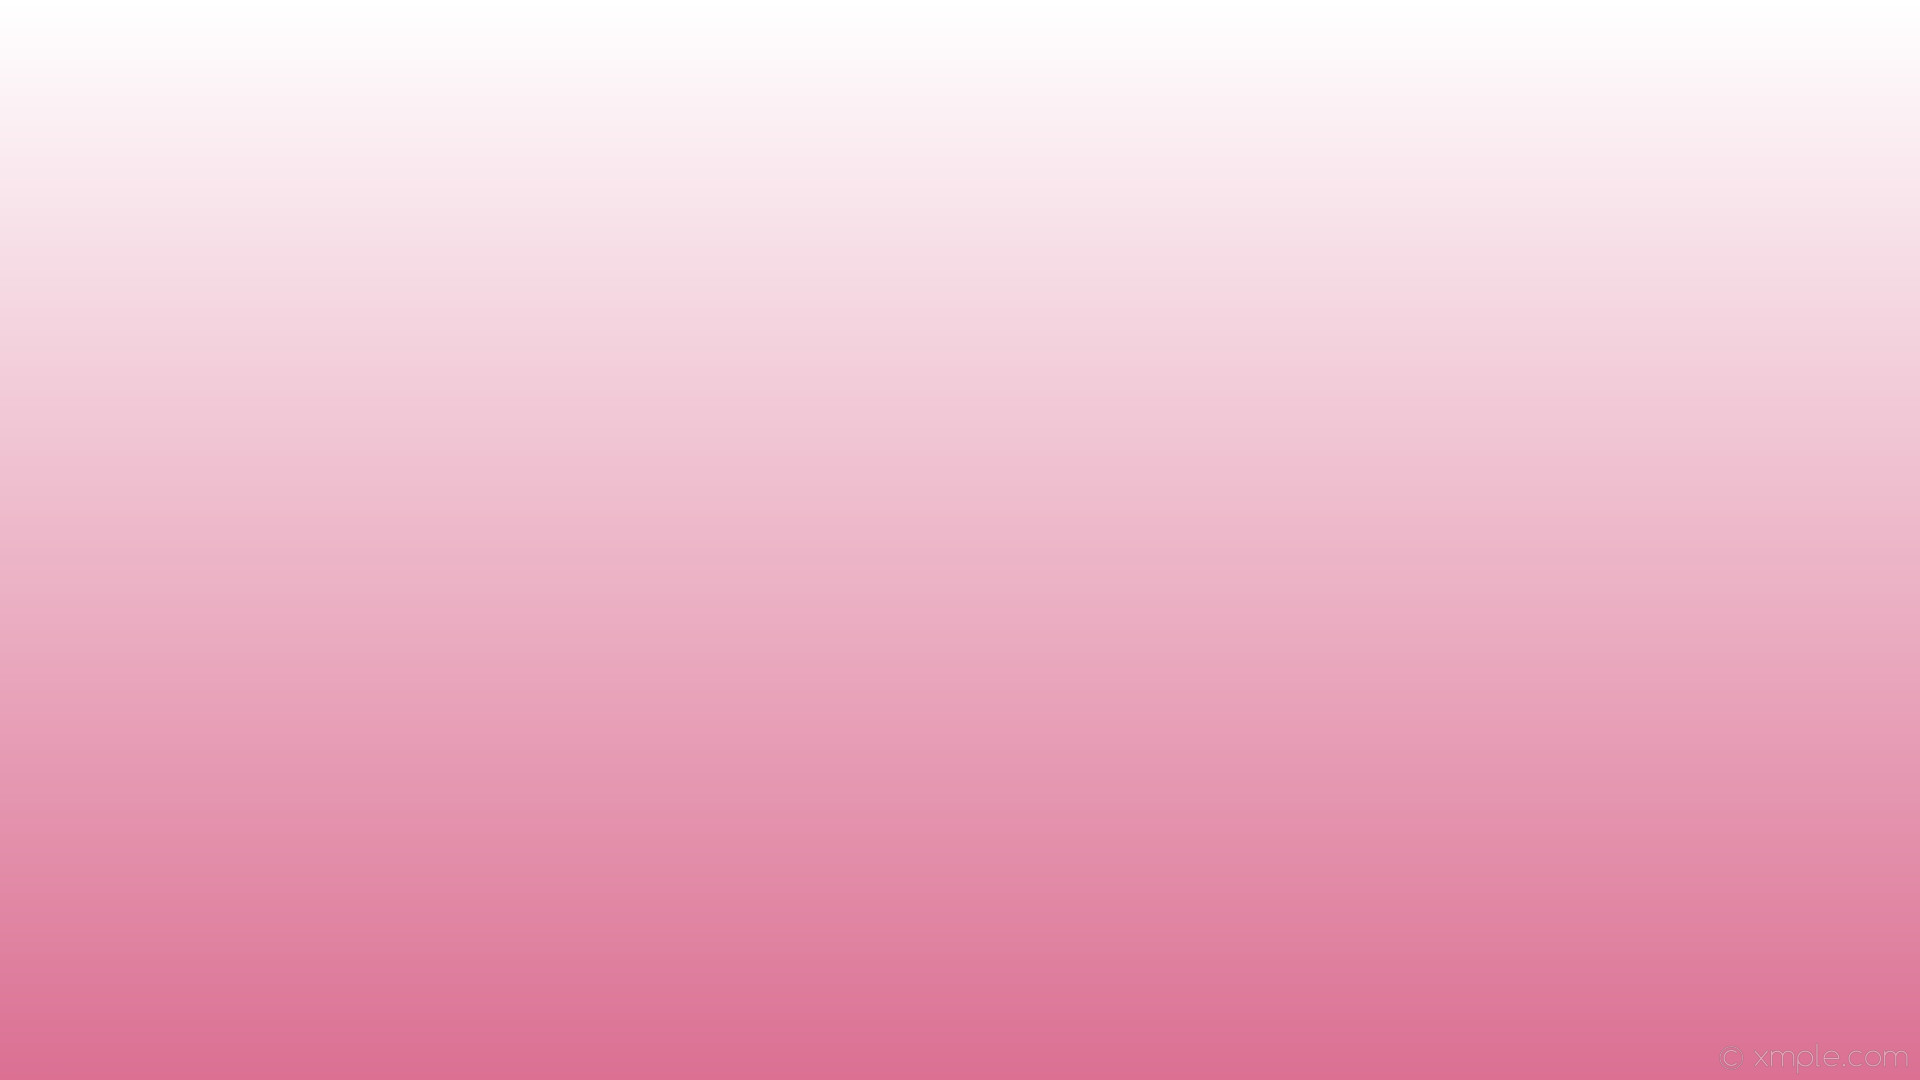 1920x1080 wallpaper white pink linear gradient pale violet red #db7093 #ffffff 270Â°